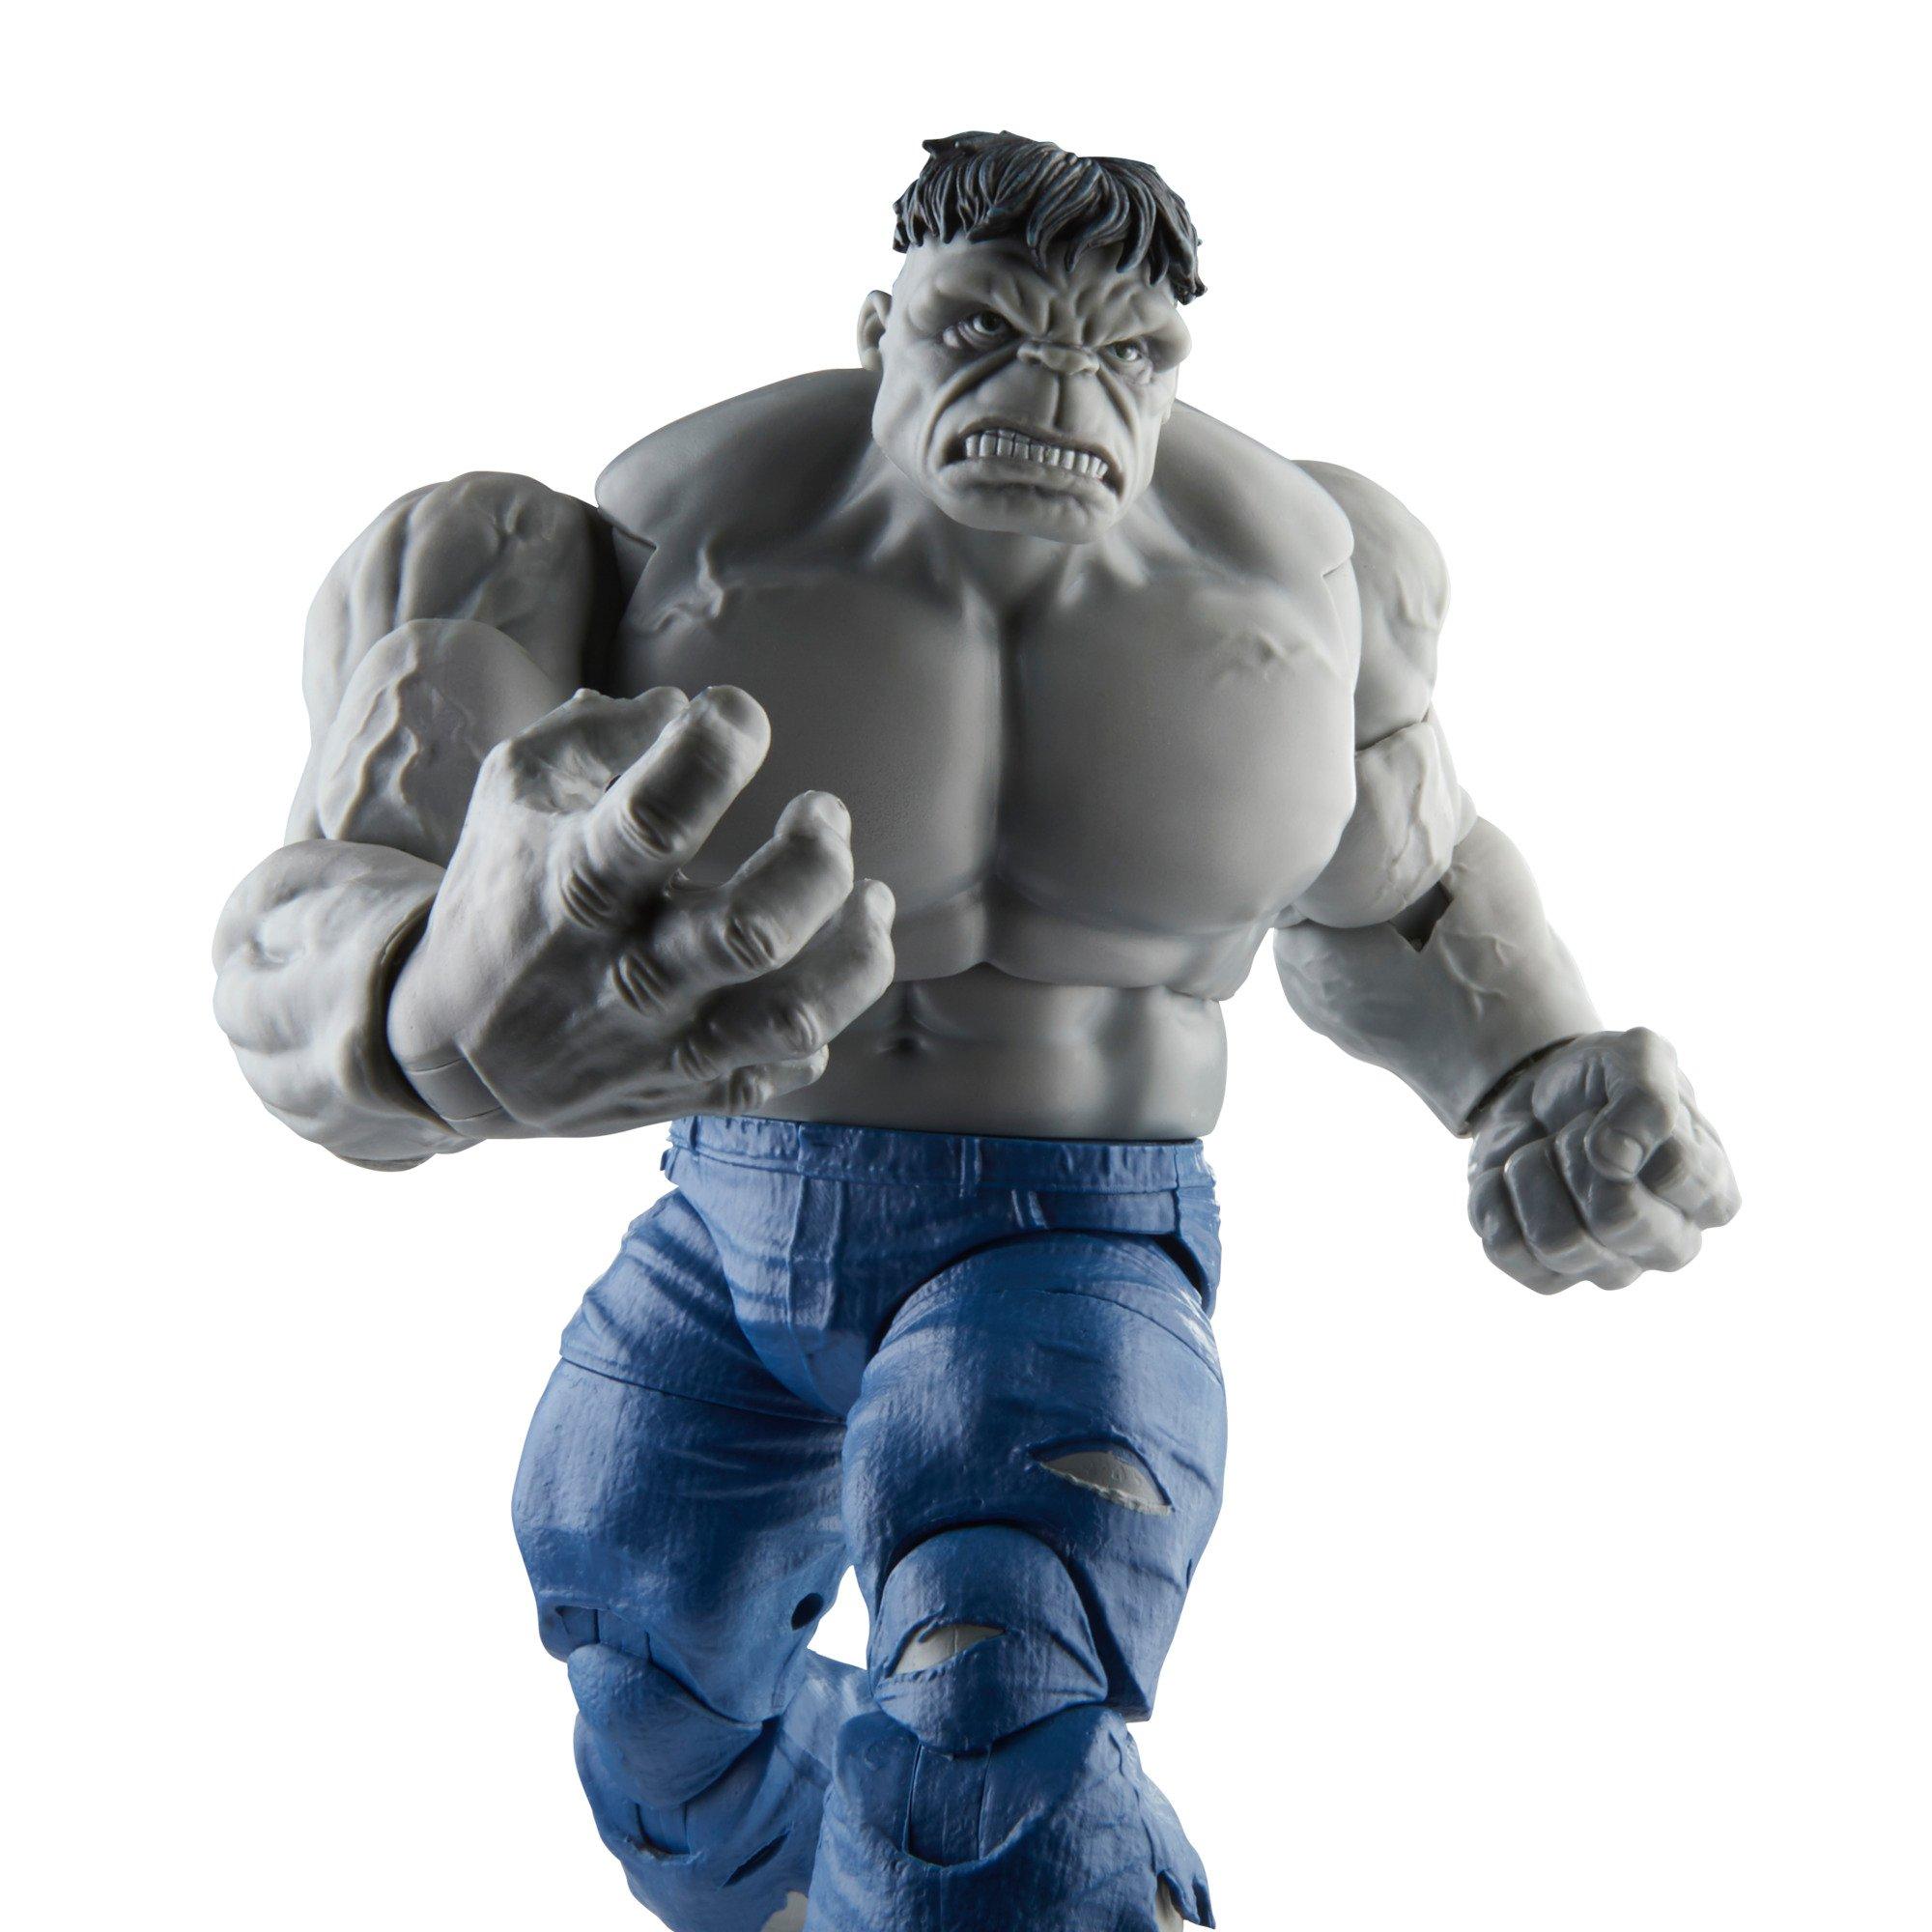 Hulk Action Figure Marvel Legends, Hulk Figure 7 Inch